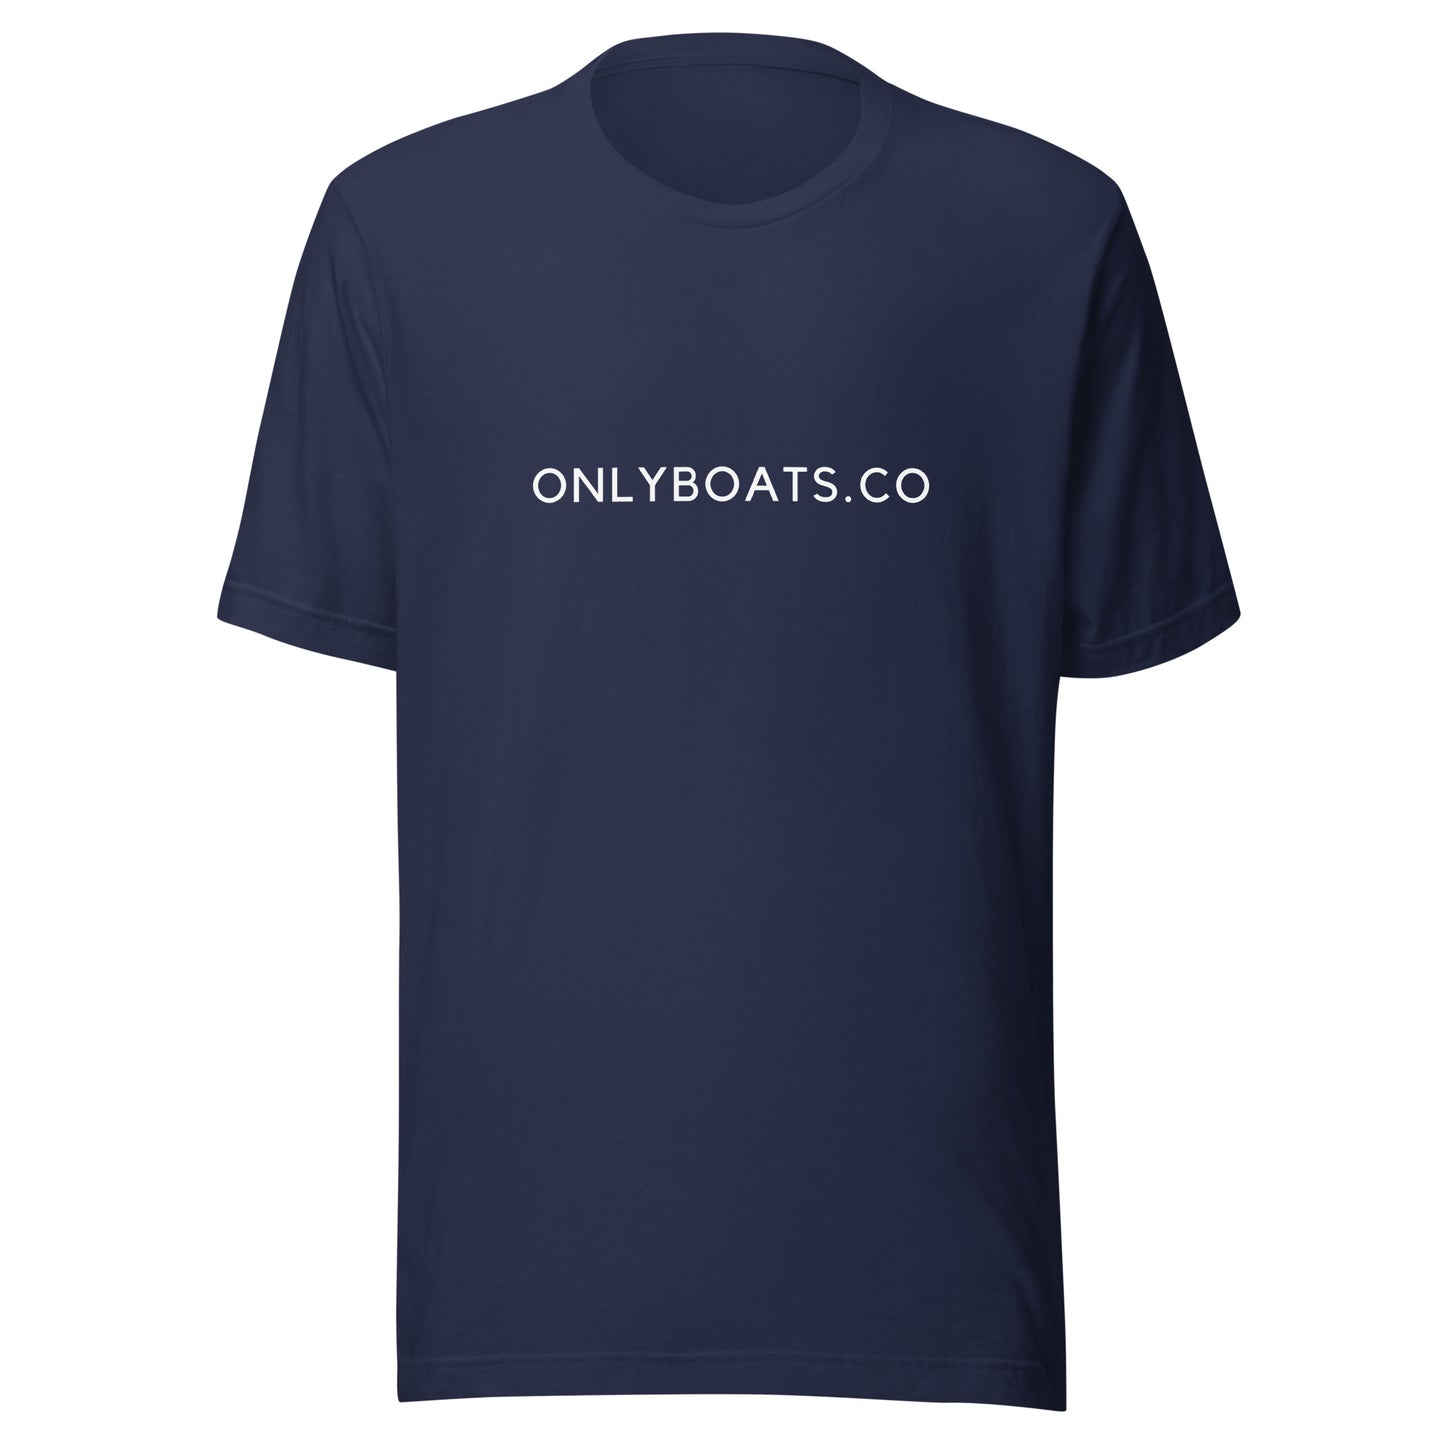 Onlyboats.co t-shirt